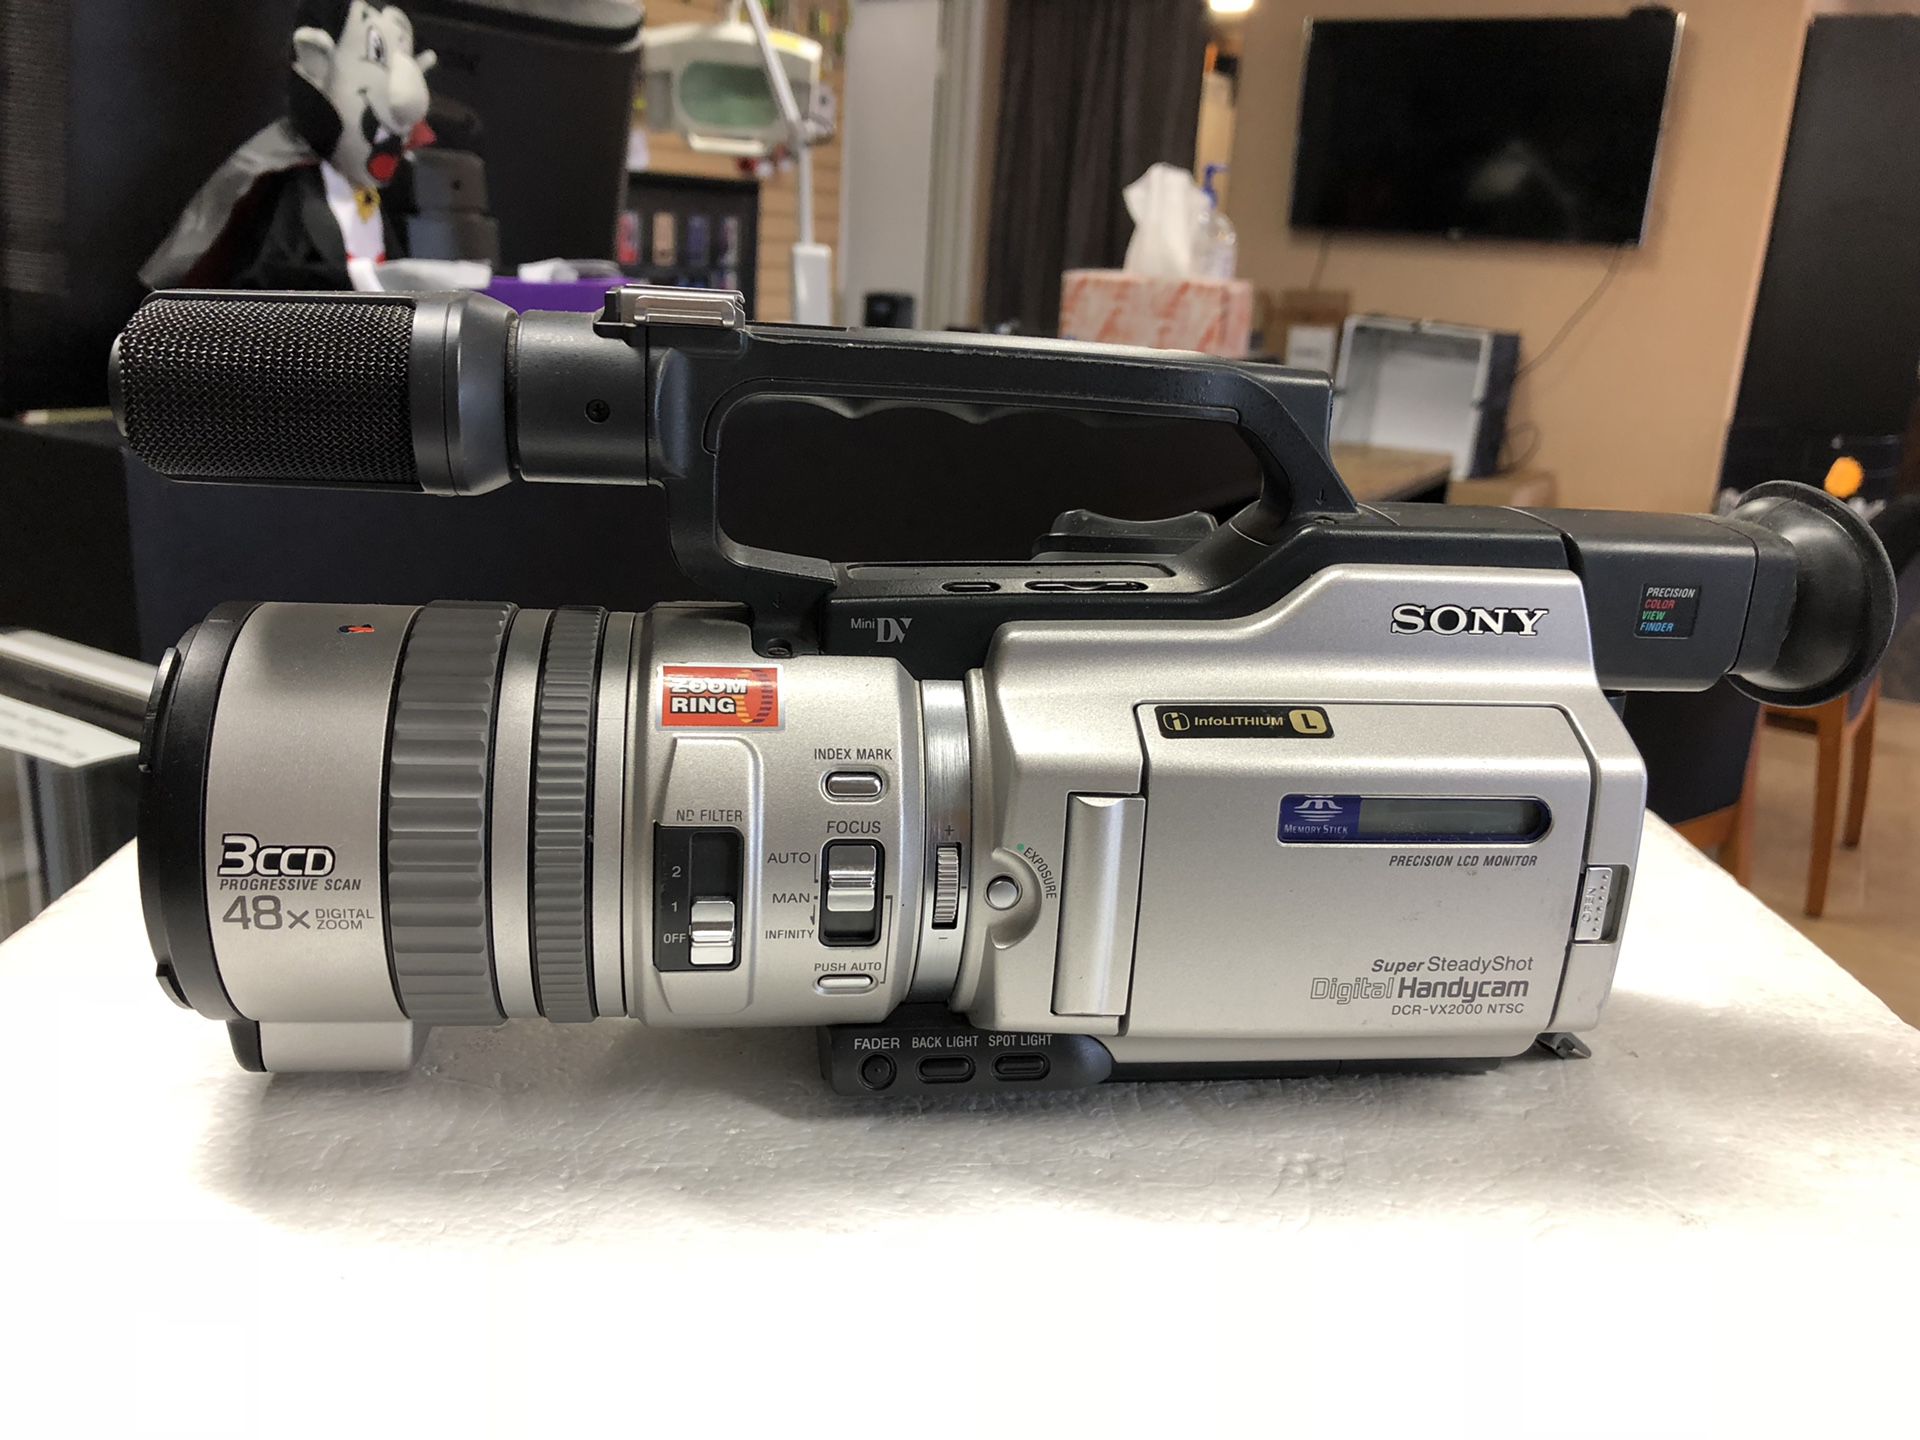 Sony Handycam DCR-VX2000 Camcorder Video Camera for Sale